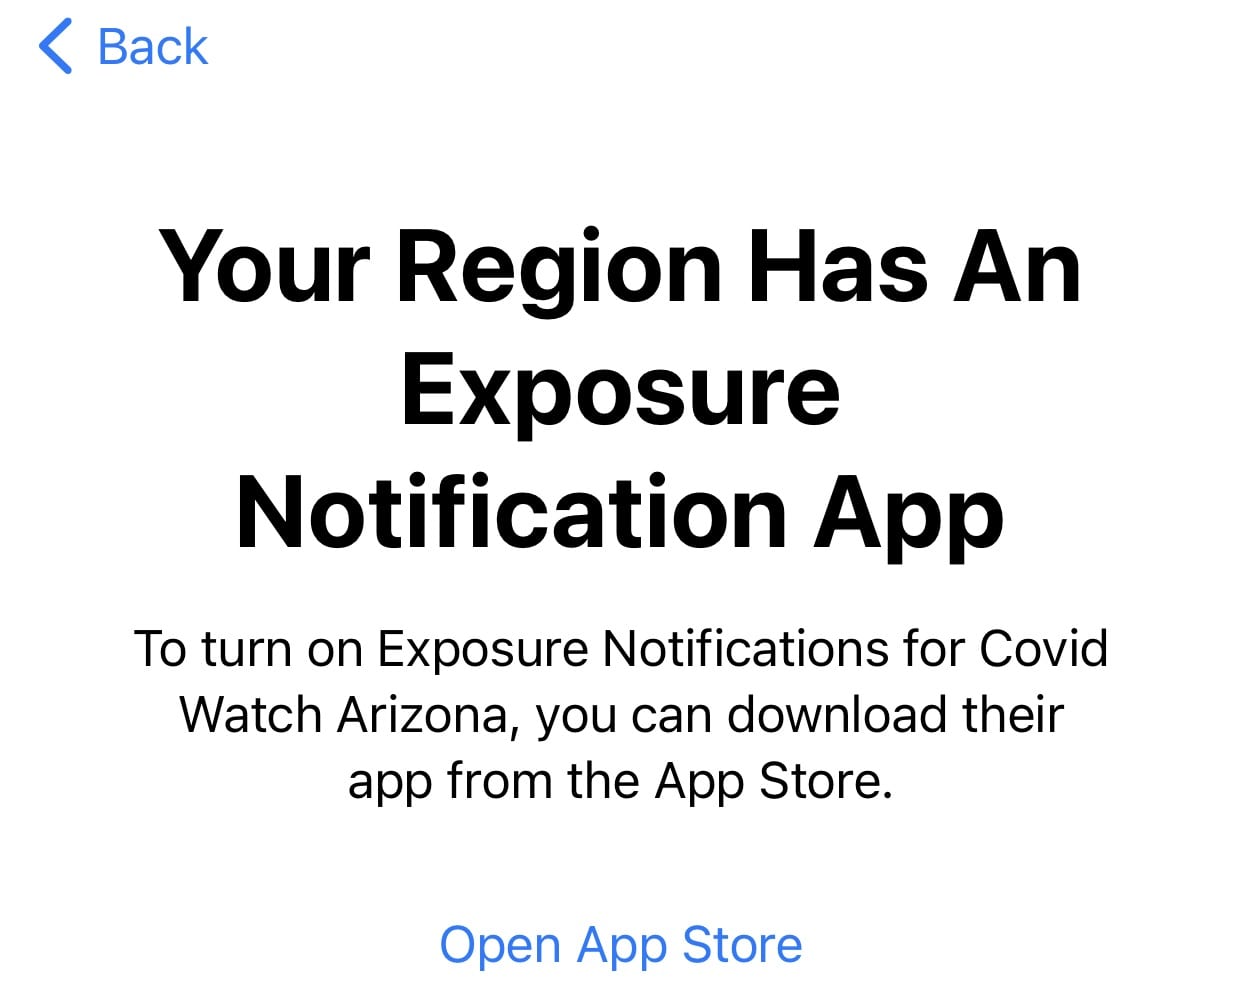 Covid Watch app